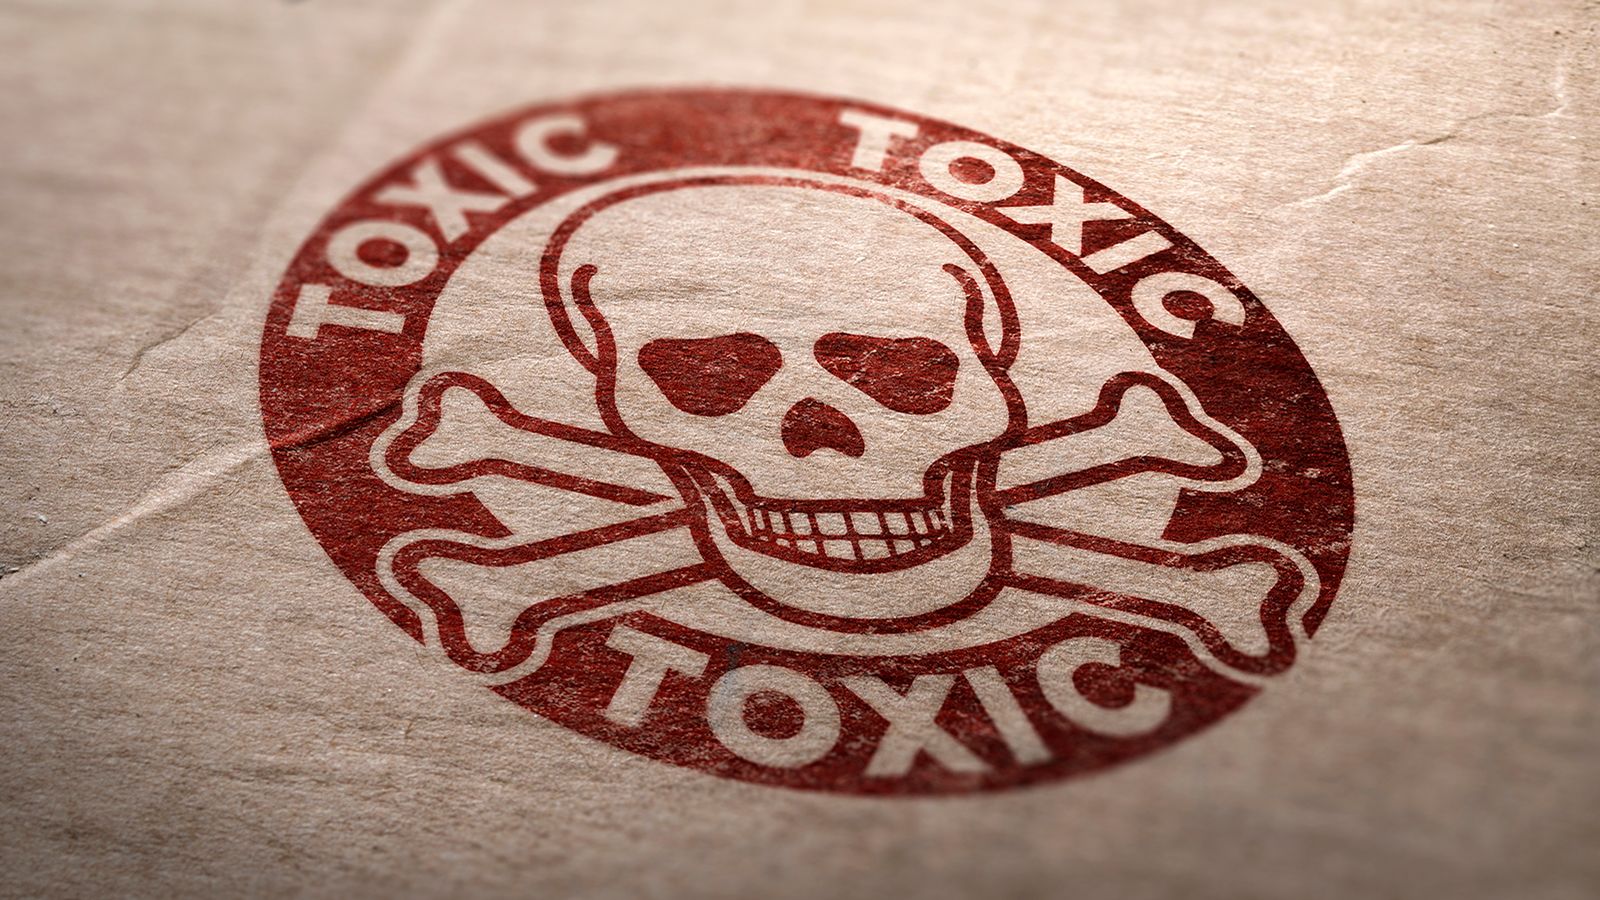 Toxic Subtances Control Act - EPA